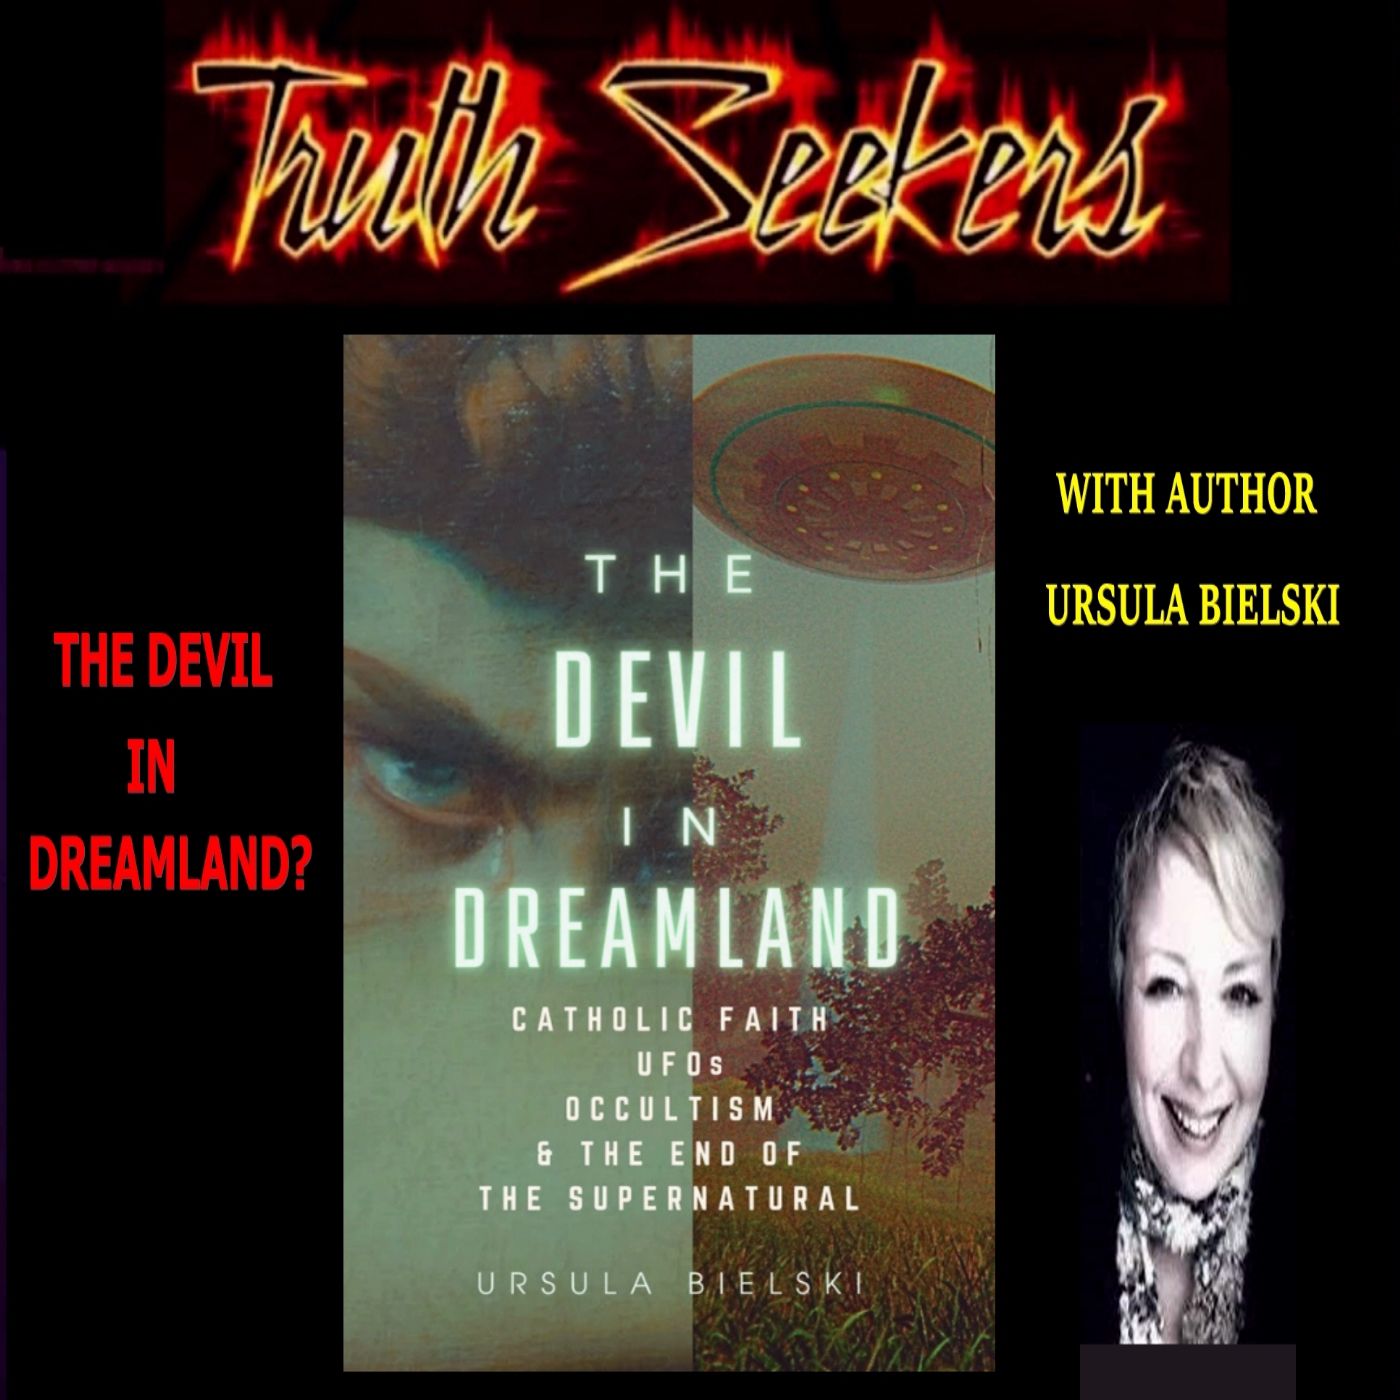 The DEVIL in DREAMLAND? With author Ursula Bielski